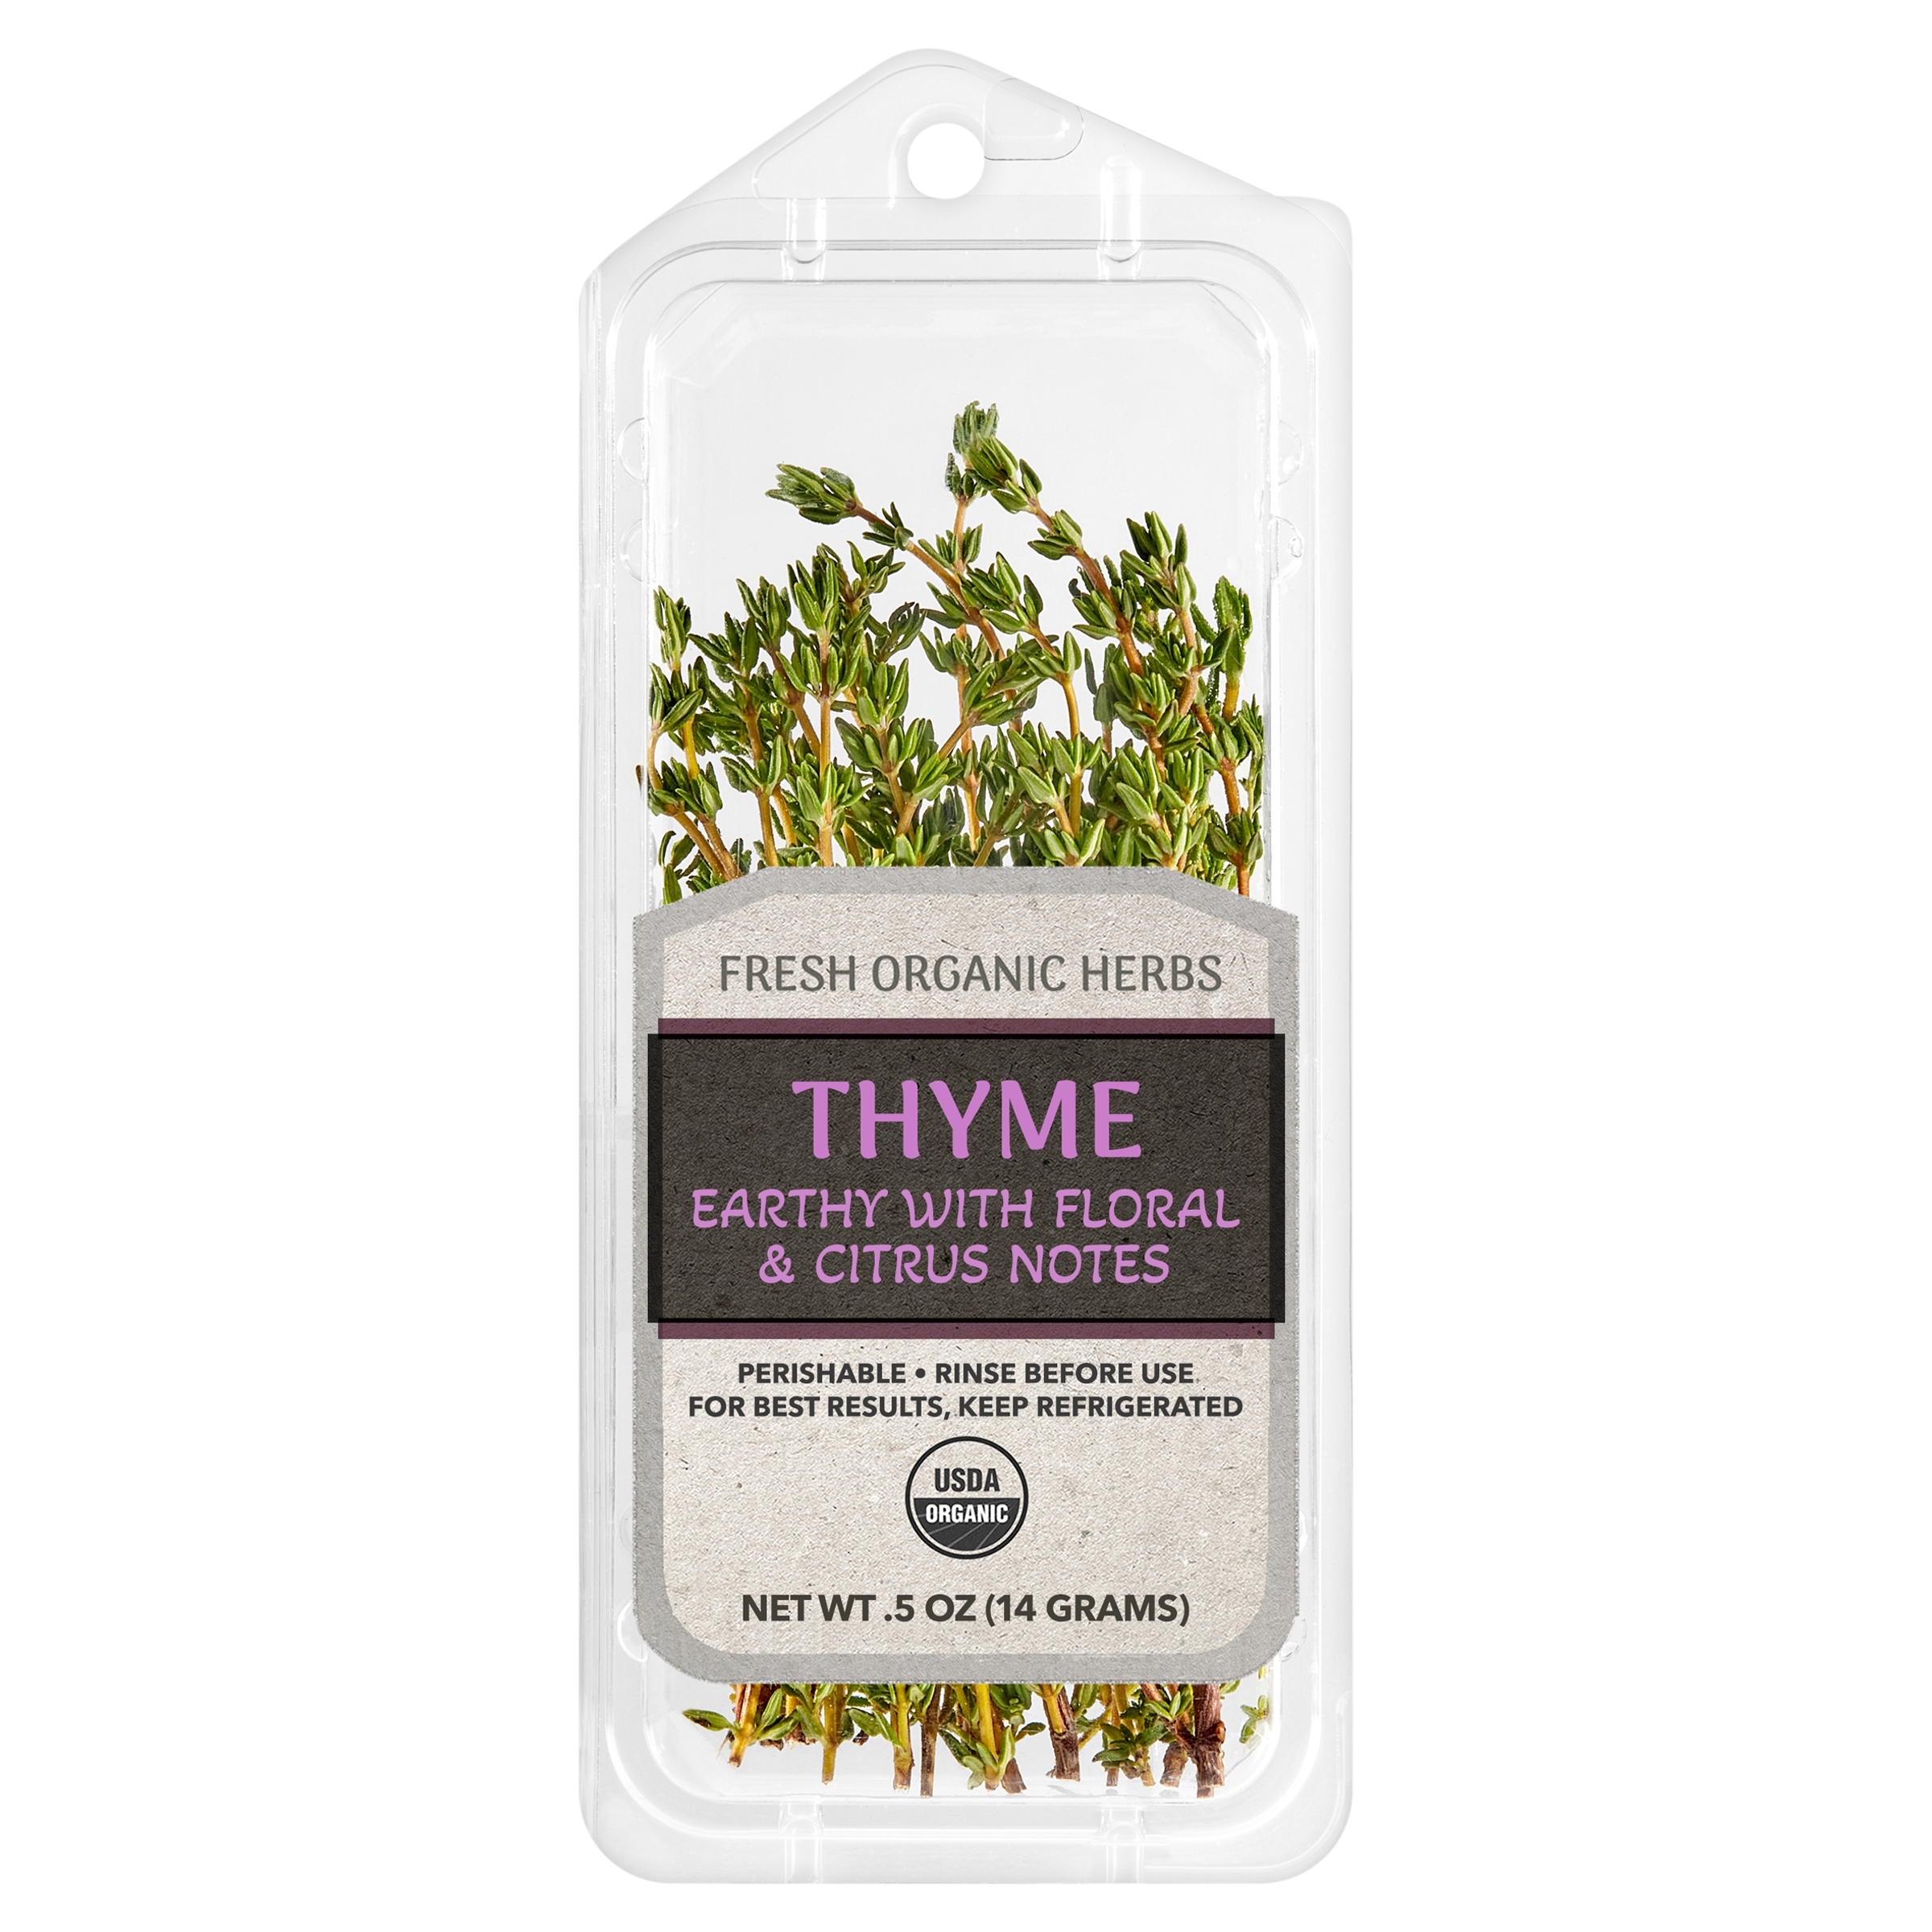 Fresh Cut Organic Thyme, 0.5 oz Clamshell - image 1 of 3